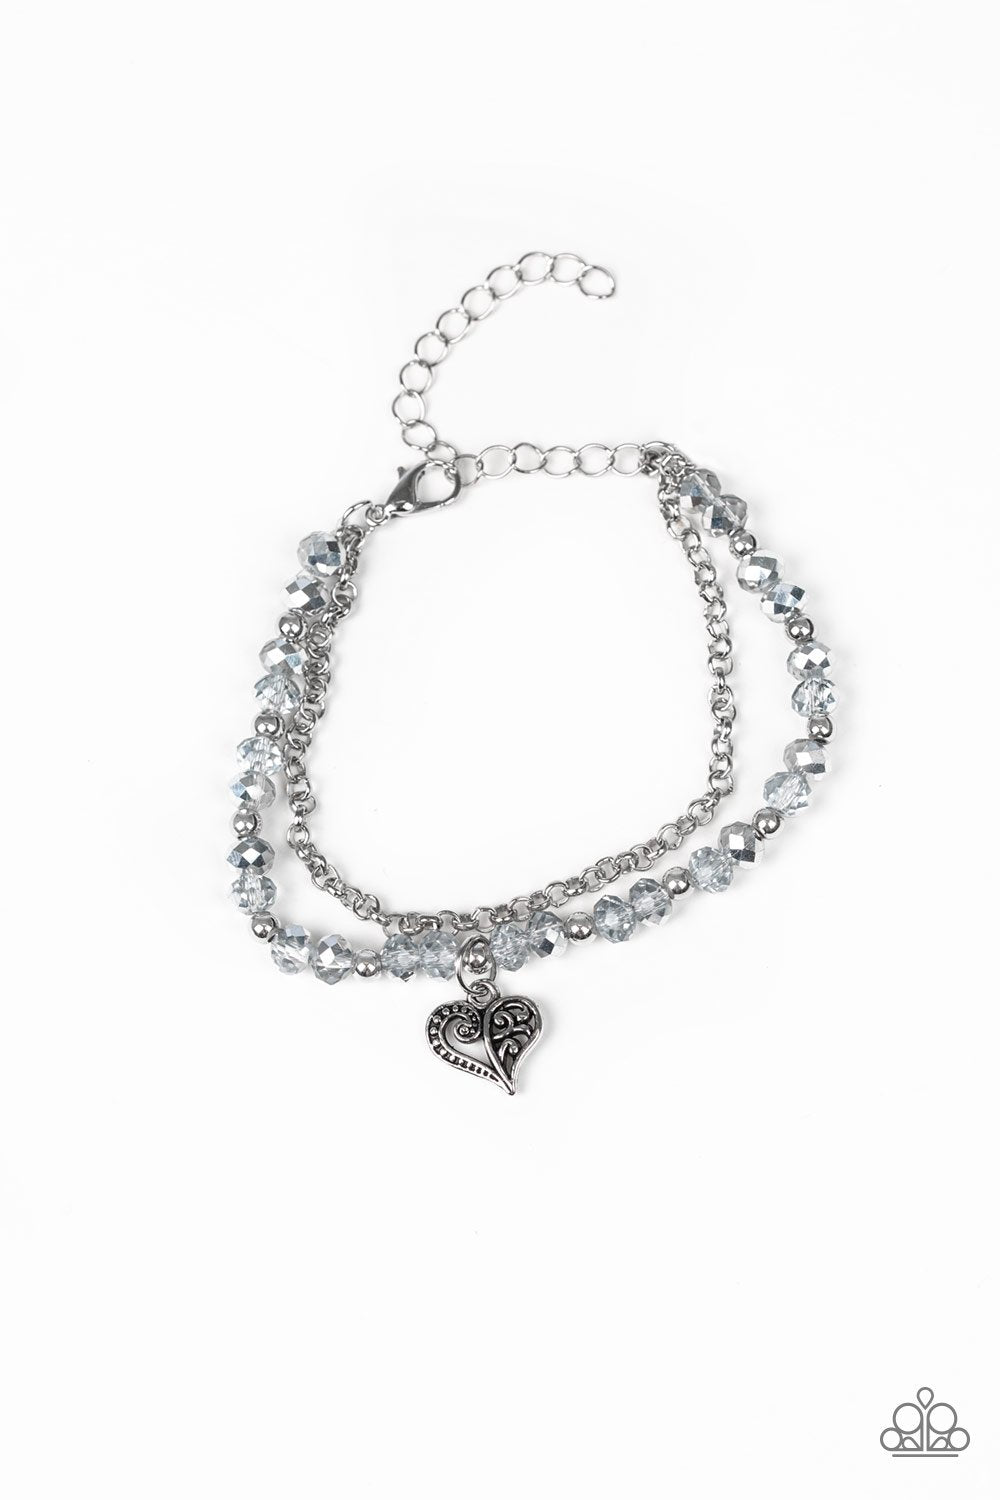 Rare Romance Silver Heart Bracelet - Paparazzi Accessories-CarasShop.com - $5 Jewelry by Cara Jewels